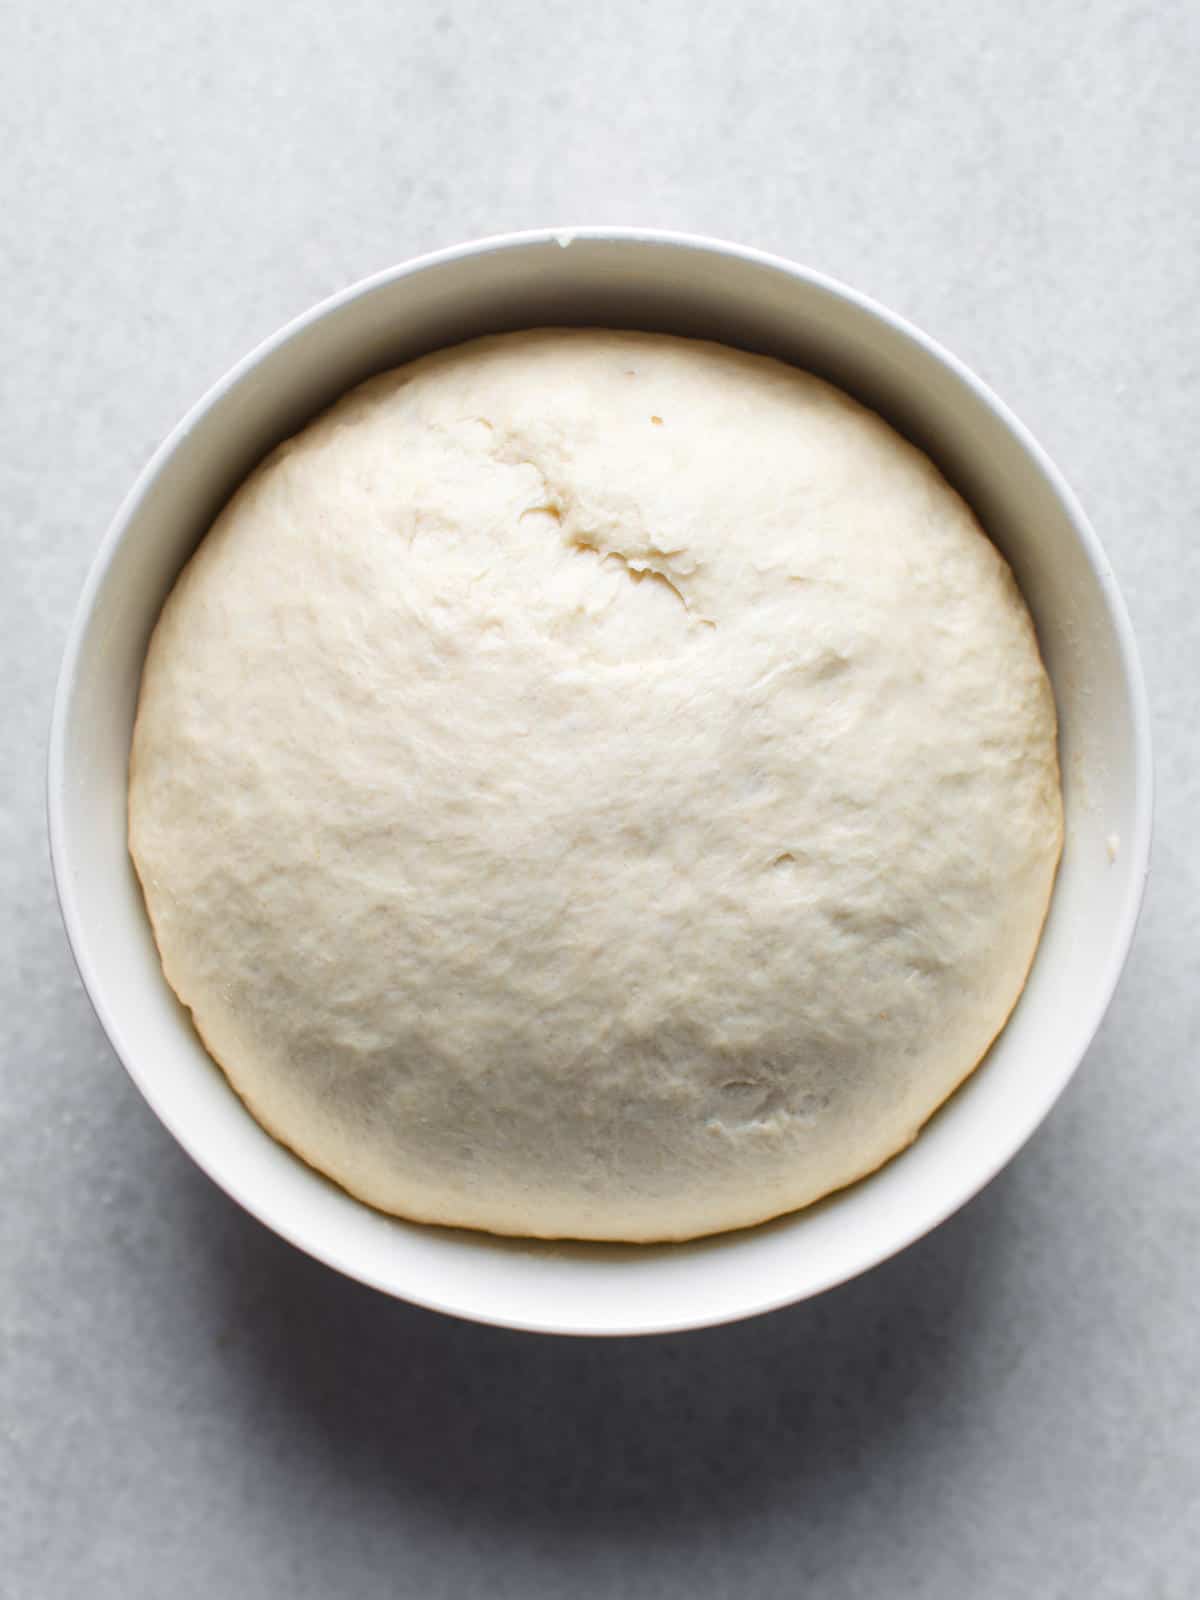 Dough risen in a bowl.